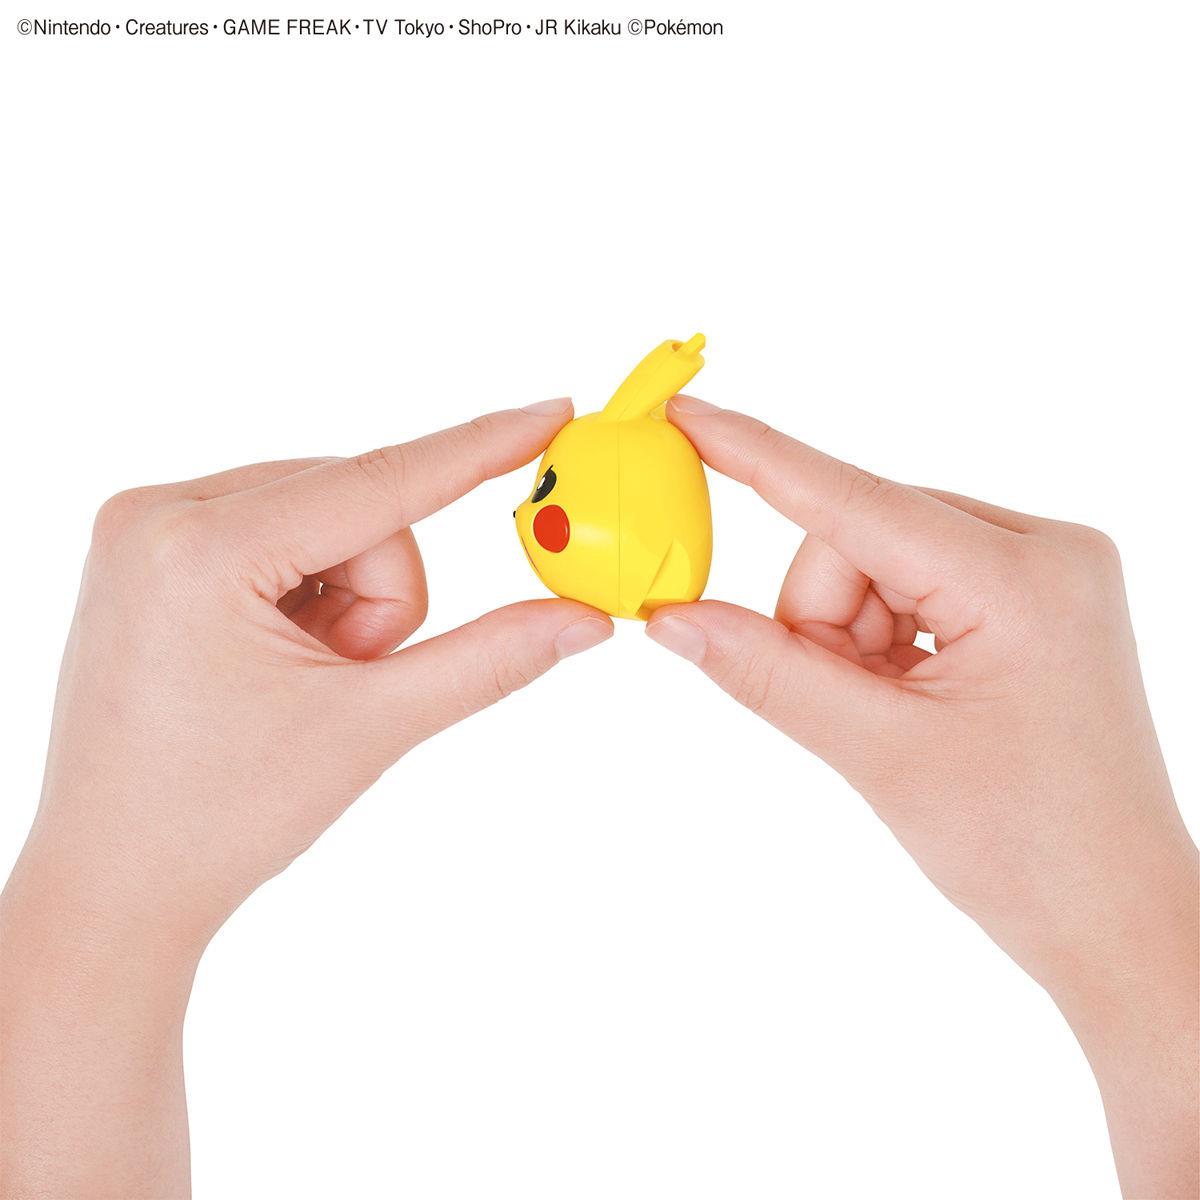 Pokemon: Pikachu (Attack) Quick!! 03 PokePla Model